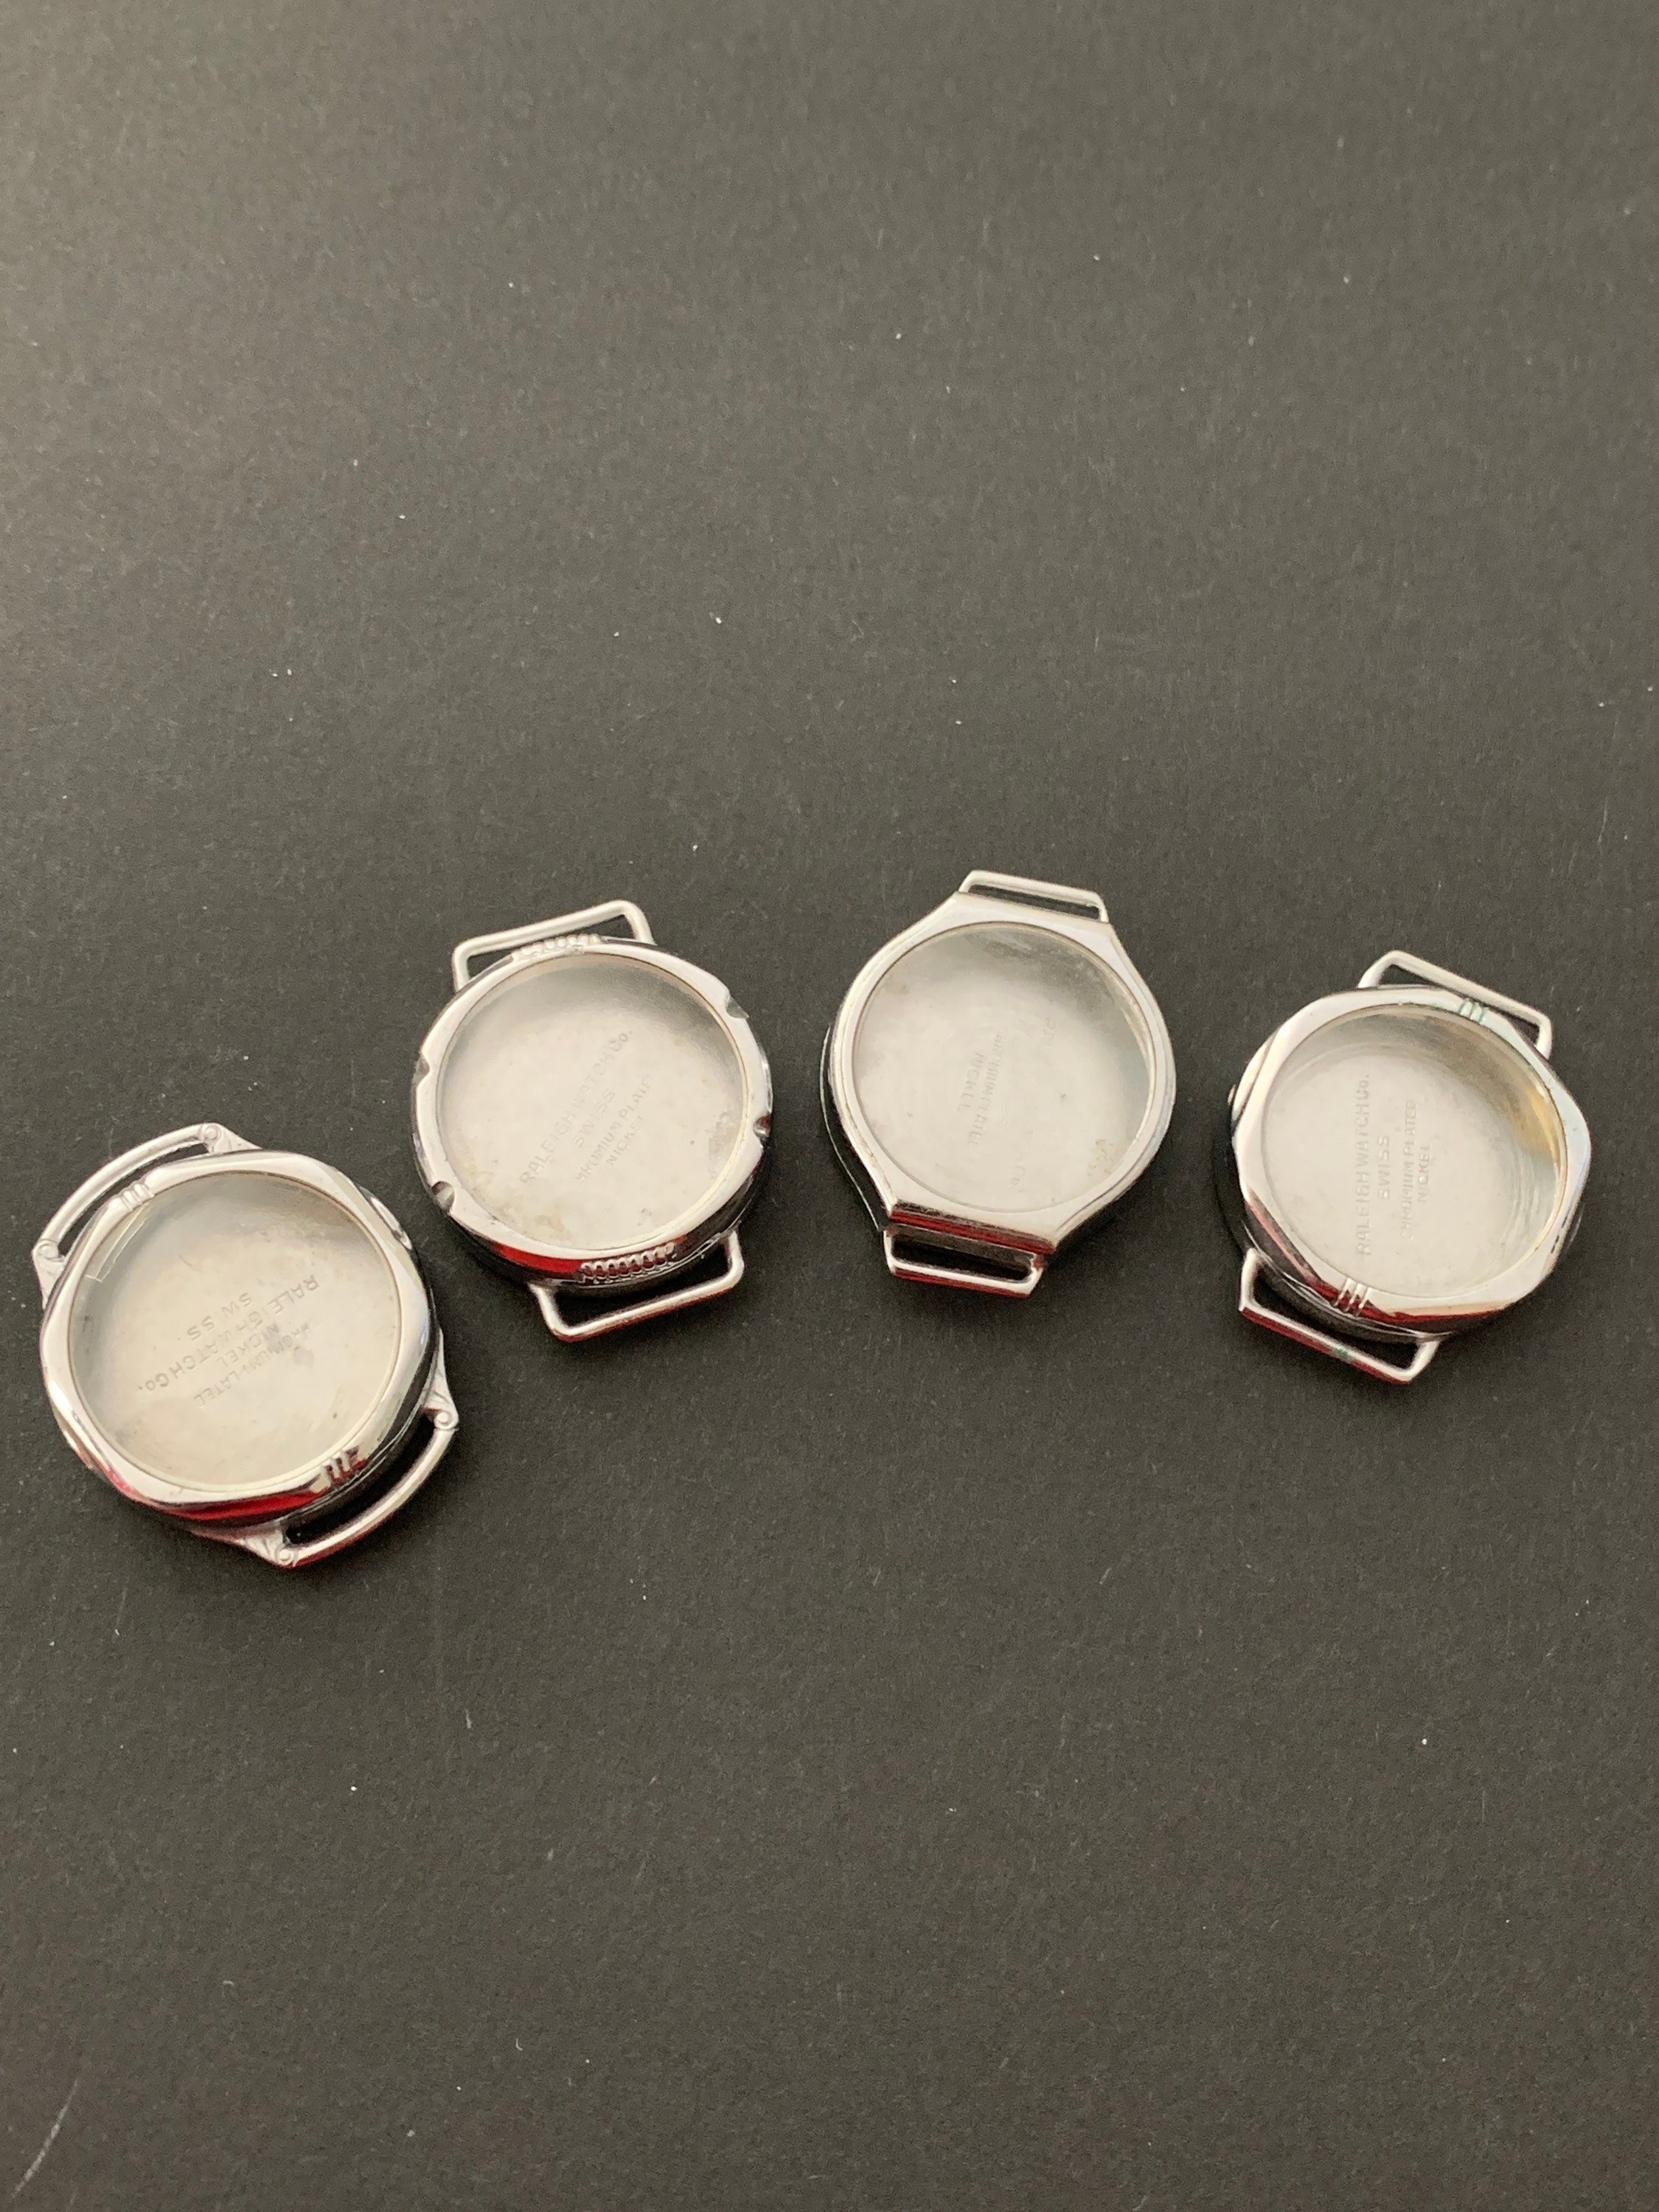 6 Pc Tweezers Set Stainless Steel Hobby Craft Jewelry Watch Repair